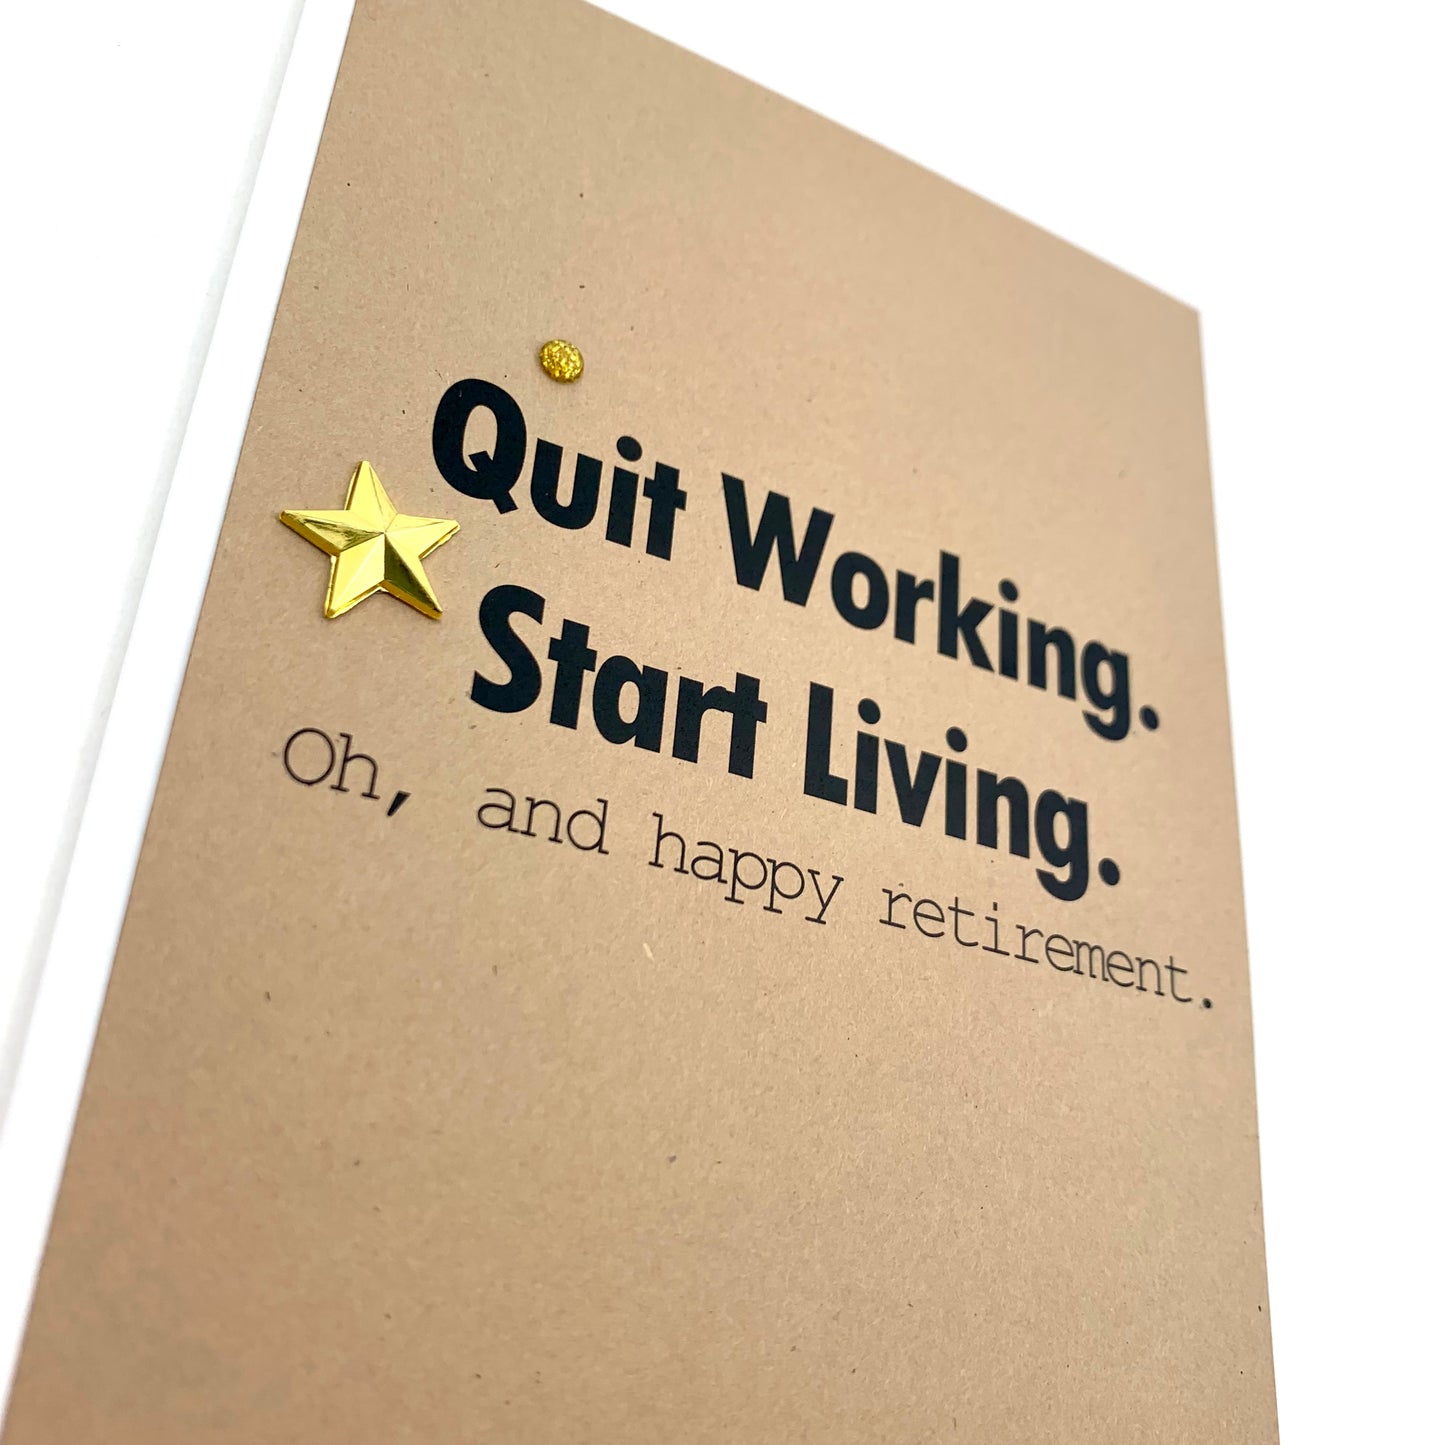 Quit Working Start Living Retirement card